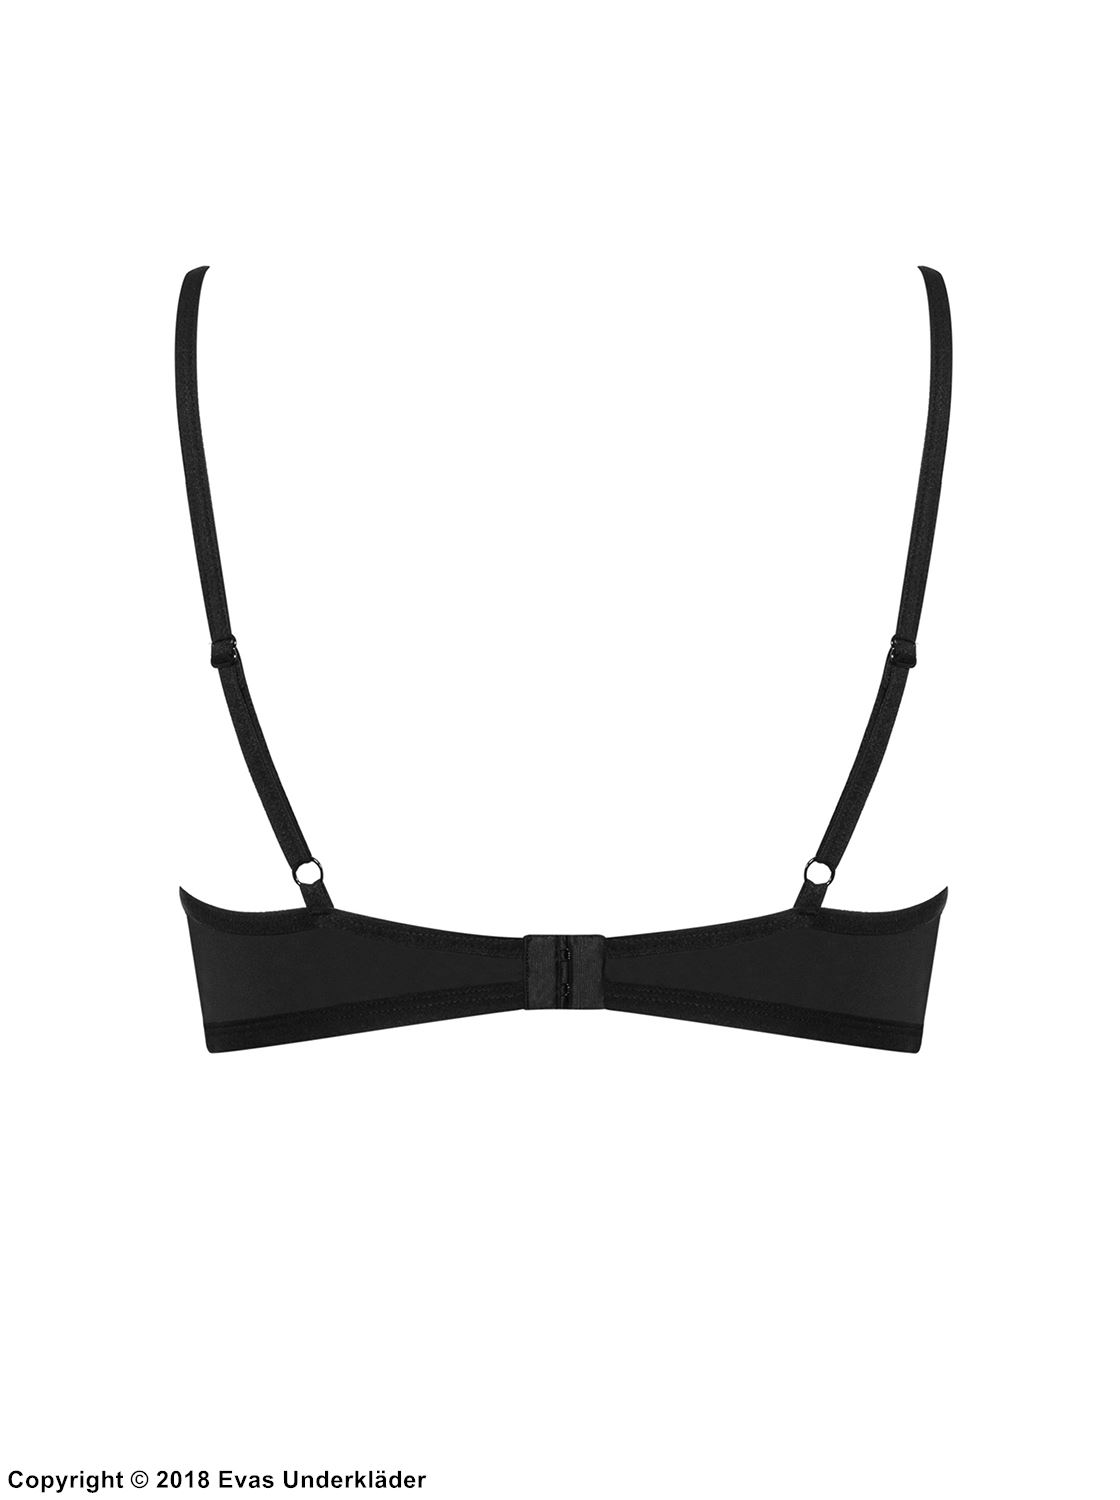 Seductive bra, beautiful lace, straps over bust